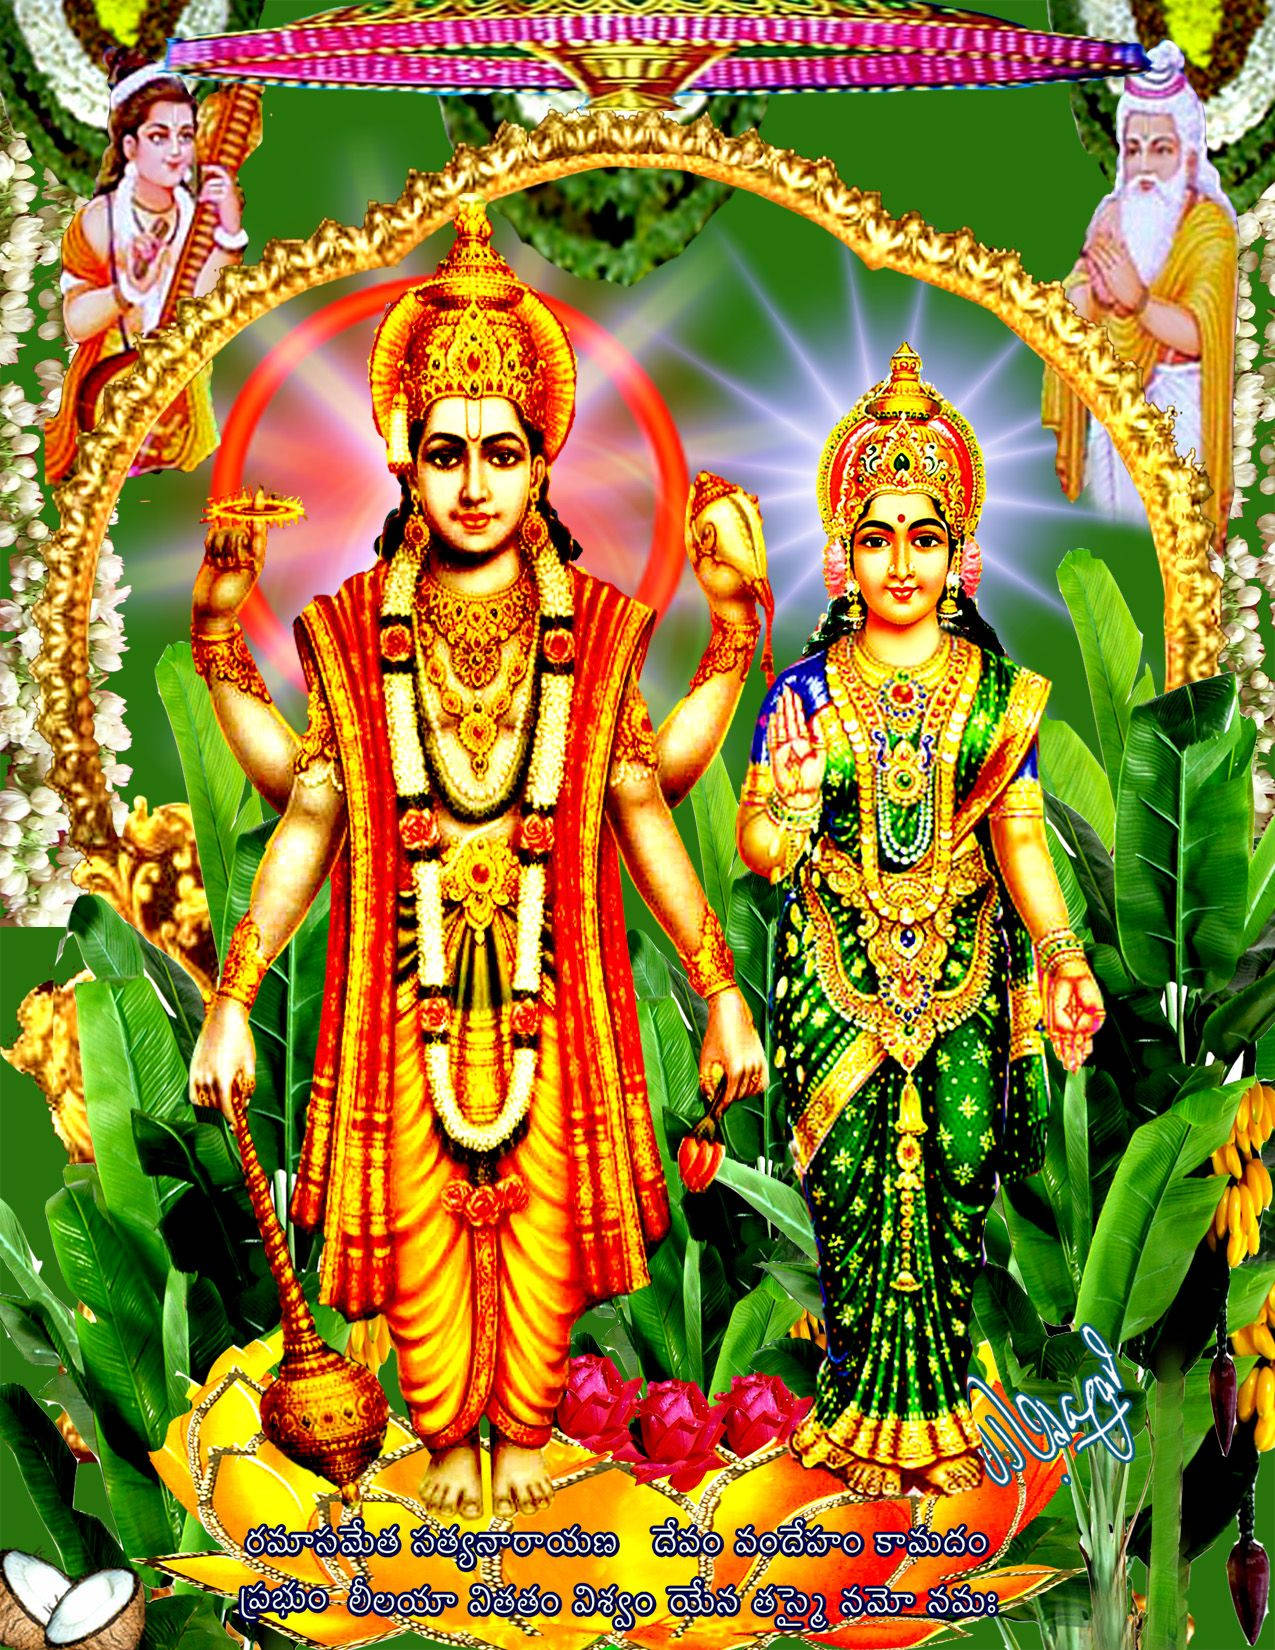 Satyanarayana Swamy Og Lakshmi Wallpaper